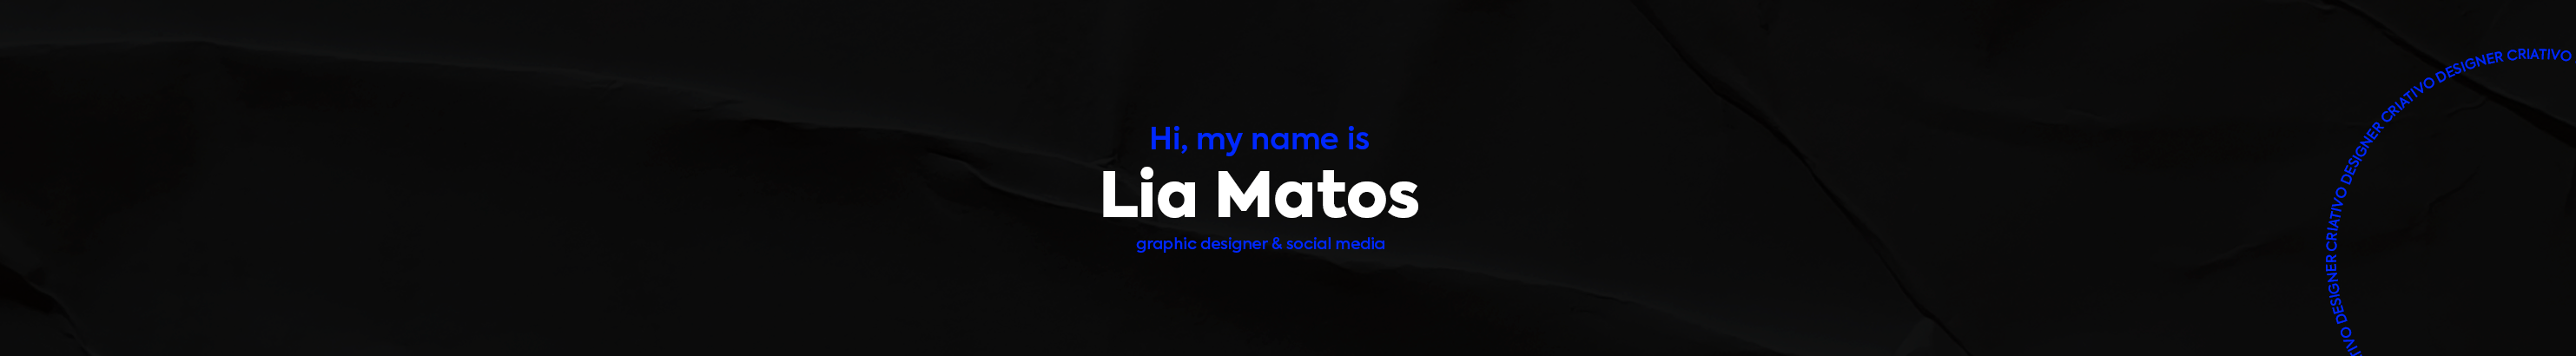 Profielbanner van Lia Matos